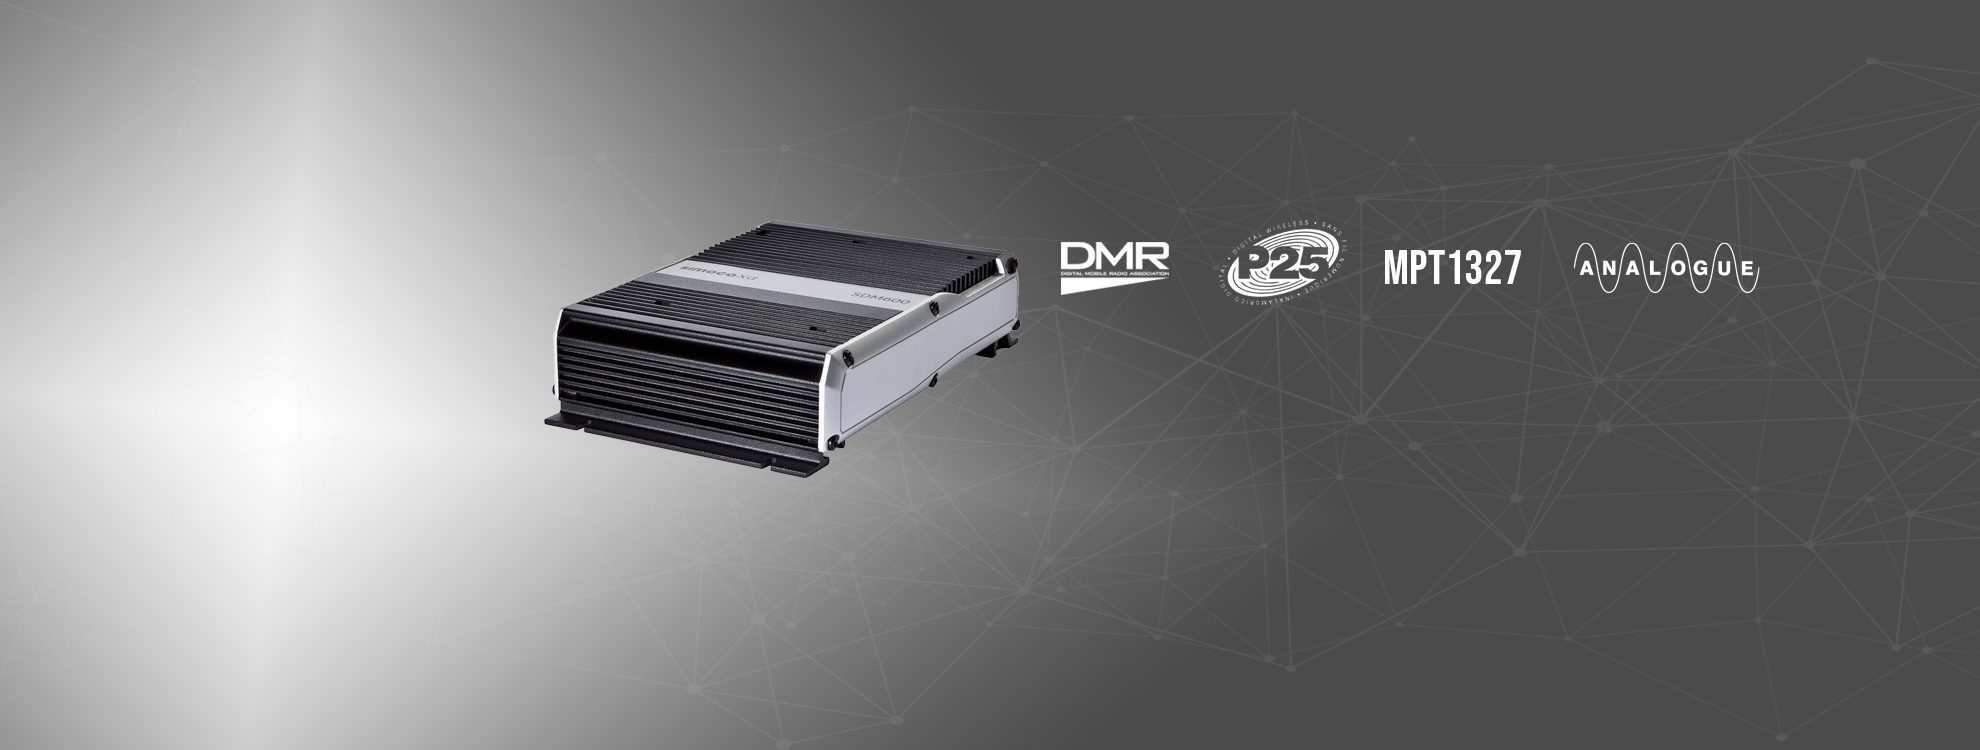 SDM600 Digital Platform